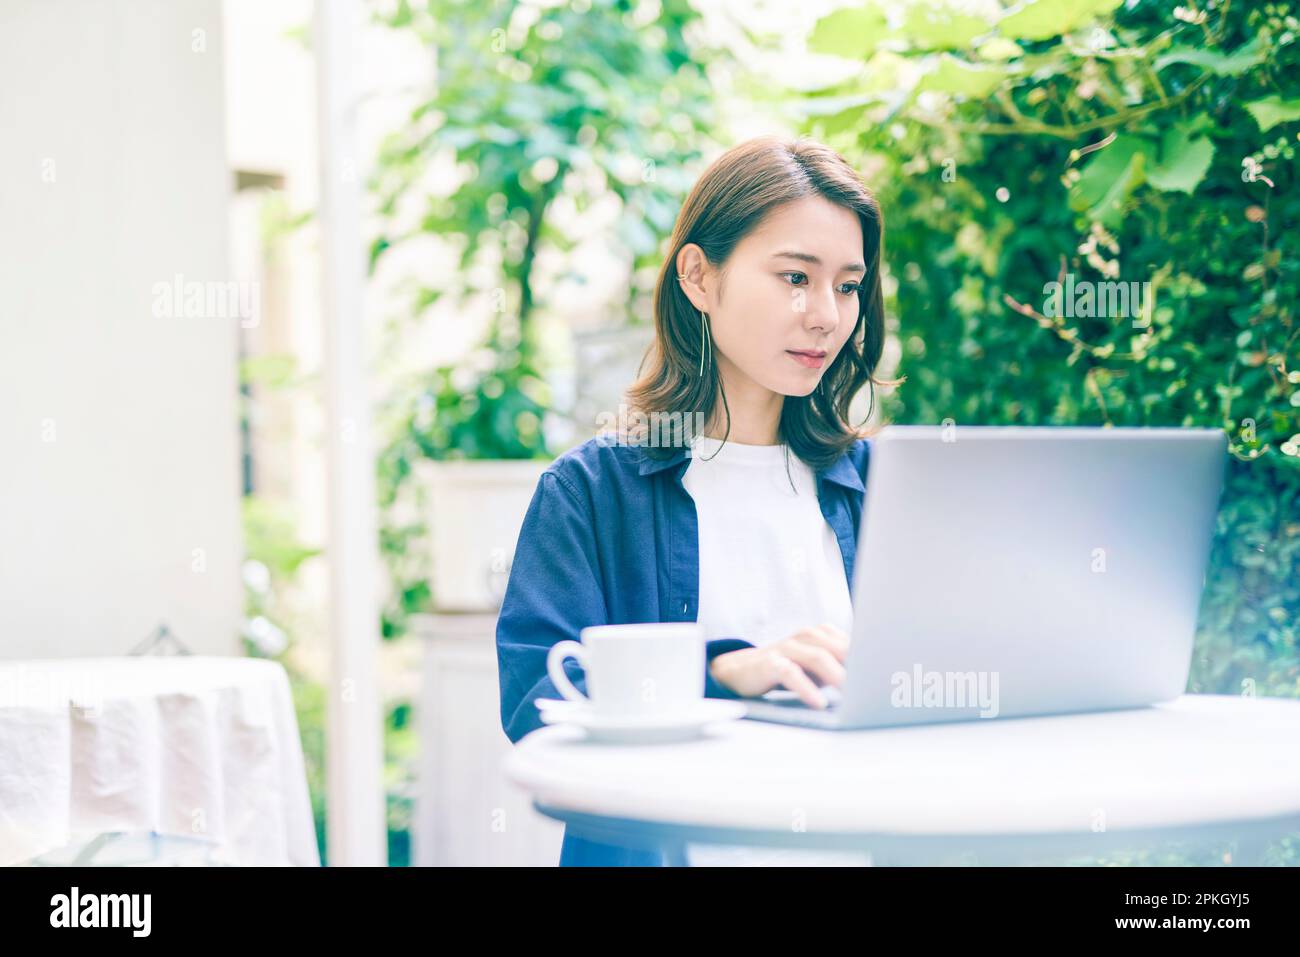 Woman operating laptop computer outdoors Stock Photo